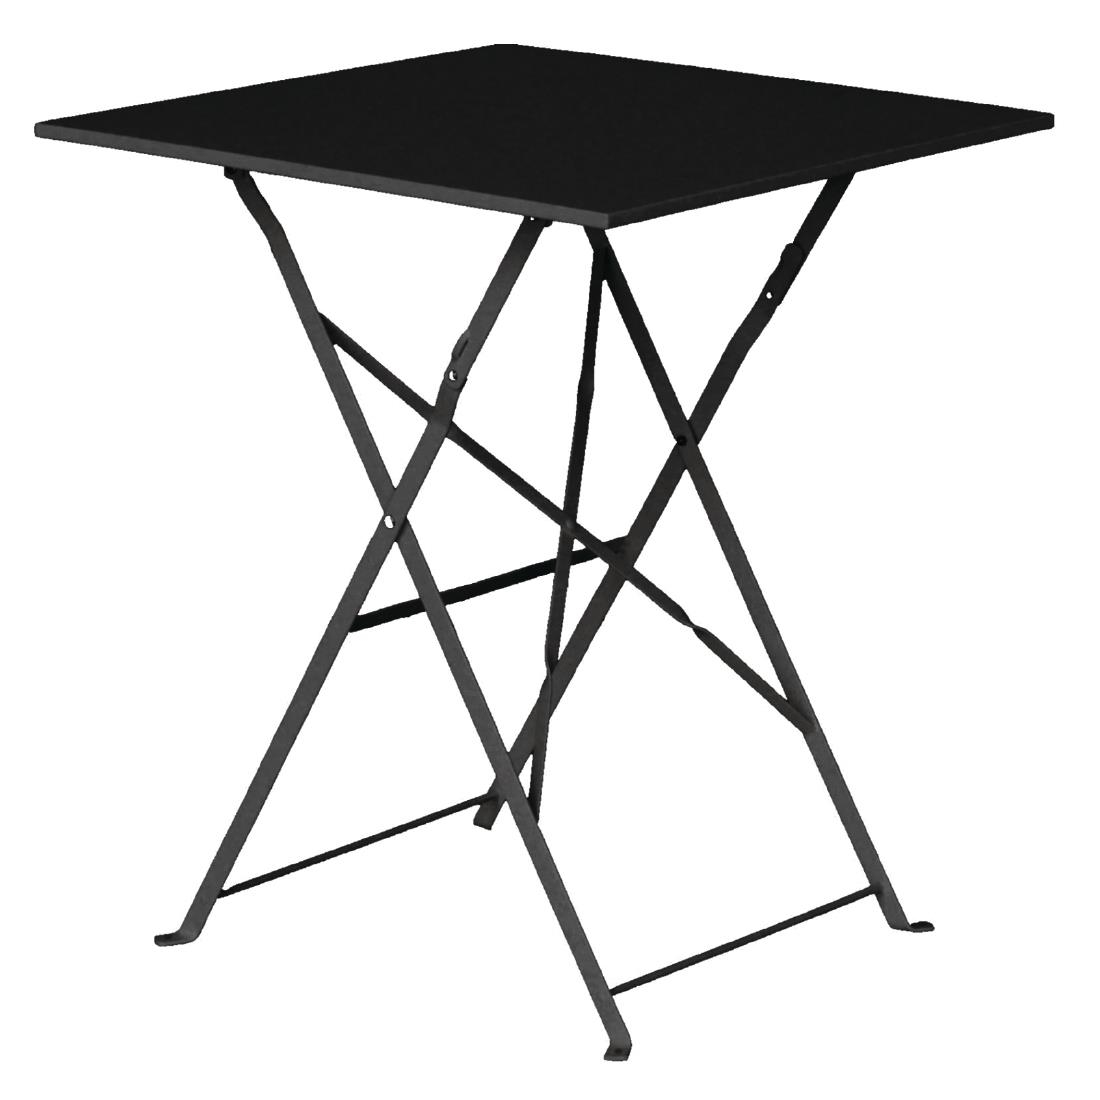 Steel Folding Table Square - Black